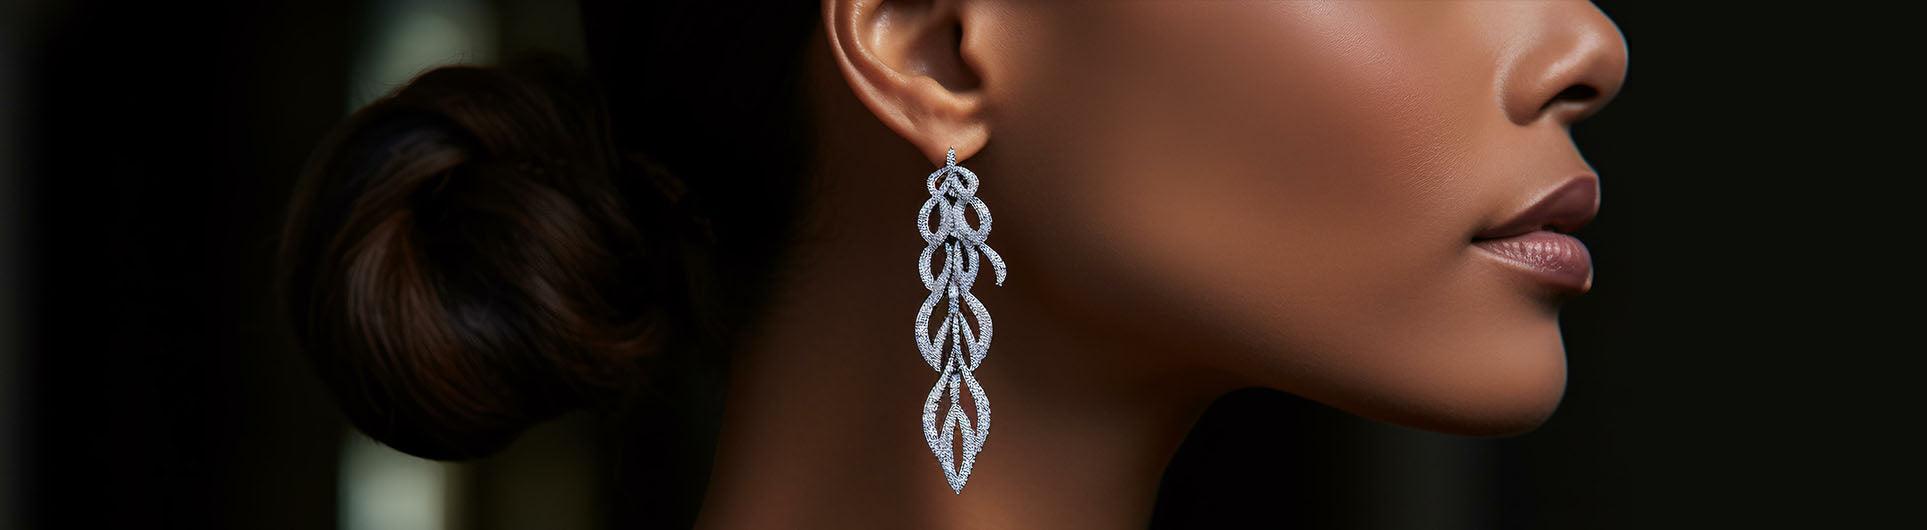 Lab grown diamond earrings from Monroe Yorke Diamonds Australia